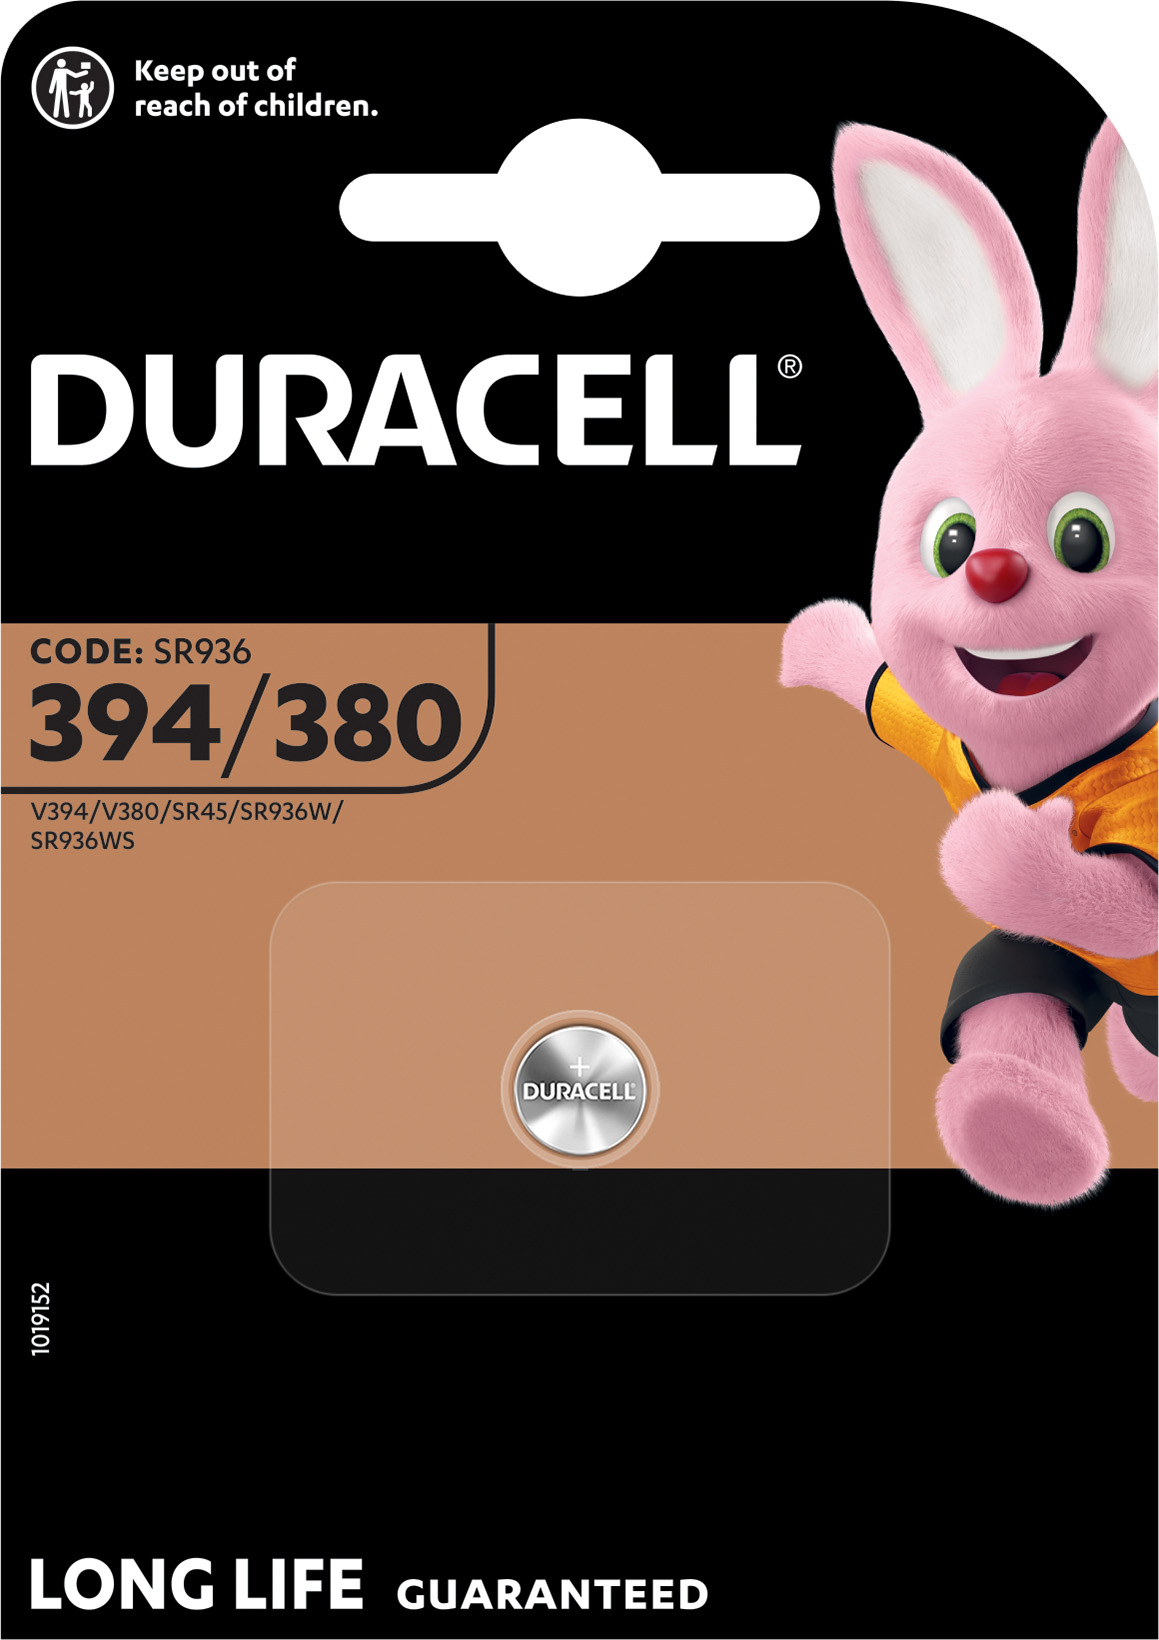 Duracell Batterie Silver Oxide, Knopfzelle, 380/394, SR45, 1.5V Watch, Retail Blister (1-Pack)